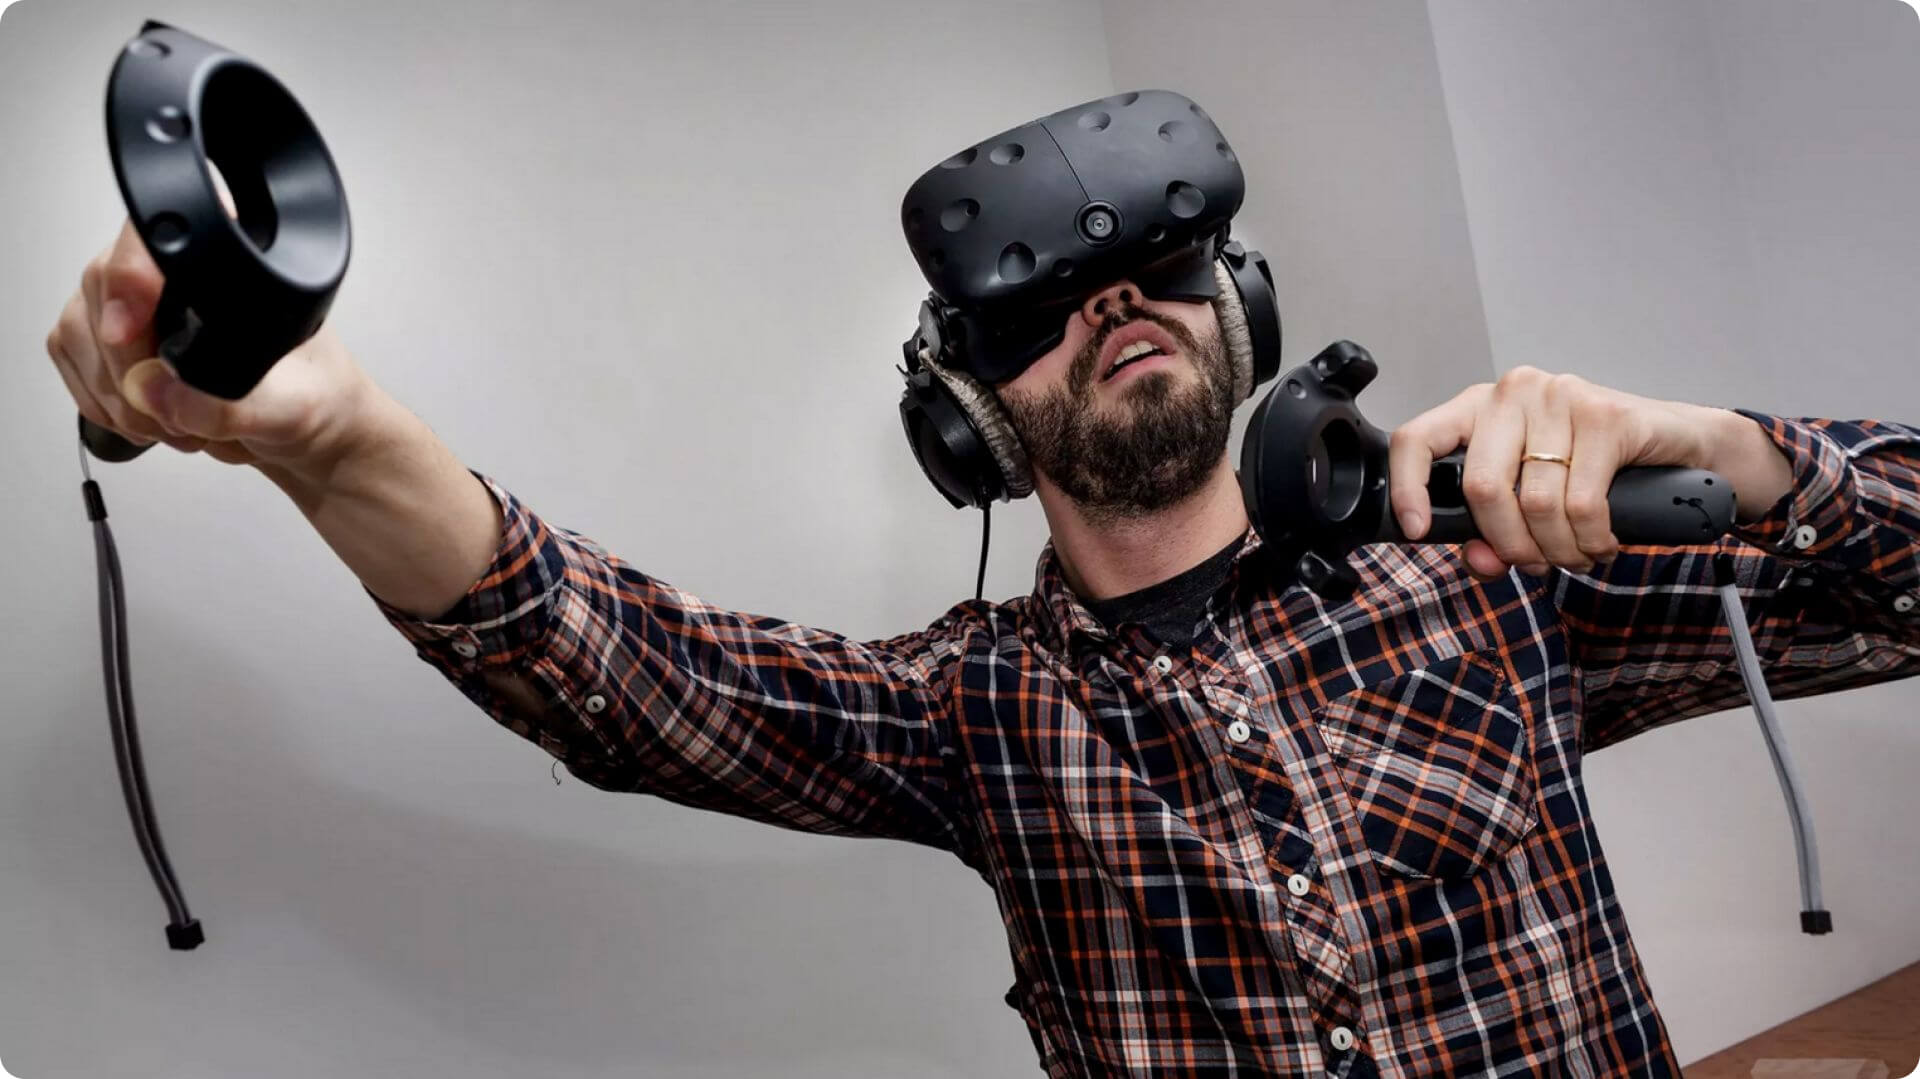 HTC VR. Виртуальная реальность (Virtual reality, VR). HTC Vive Steam. Игры в виртуальная реальность HTC Vive. Interactive vr